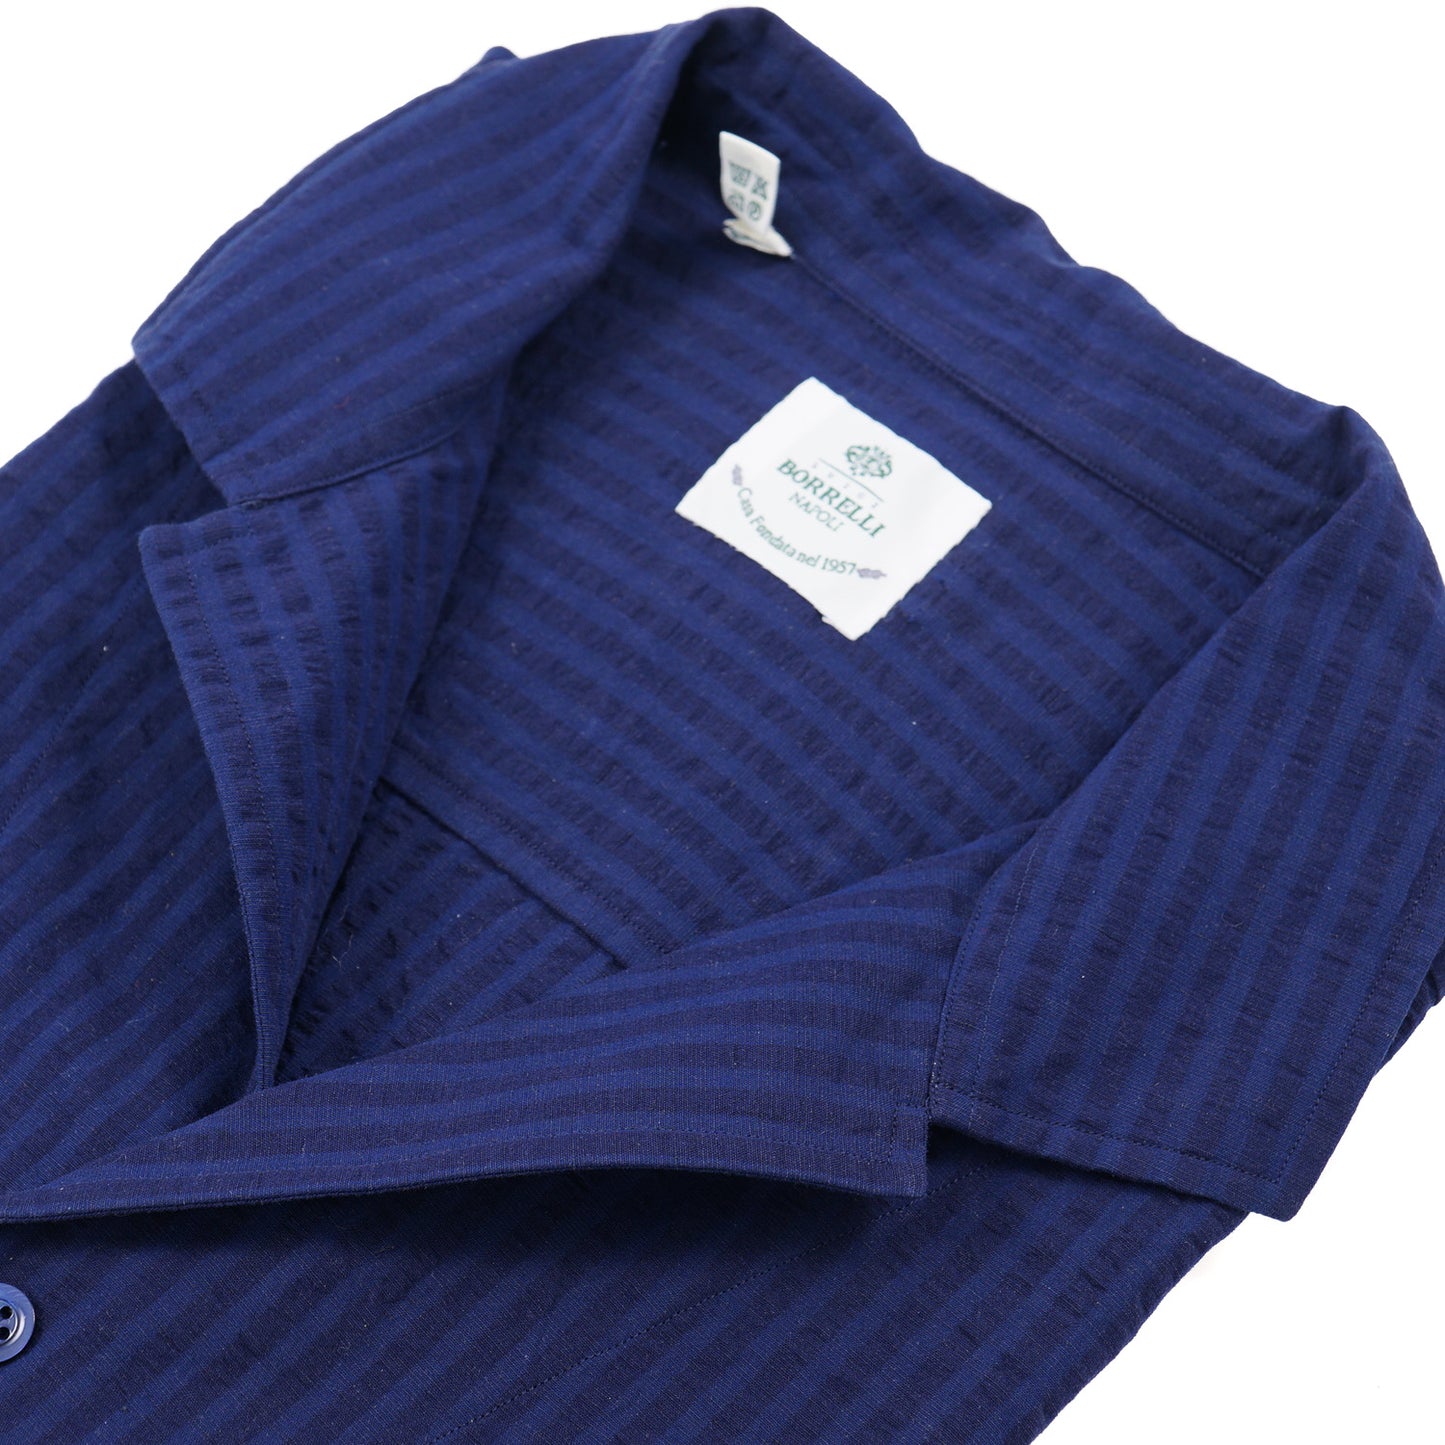 Luigi Borrelli Seersucker Cotton Shirt - Top Shelf Apparel